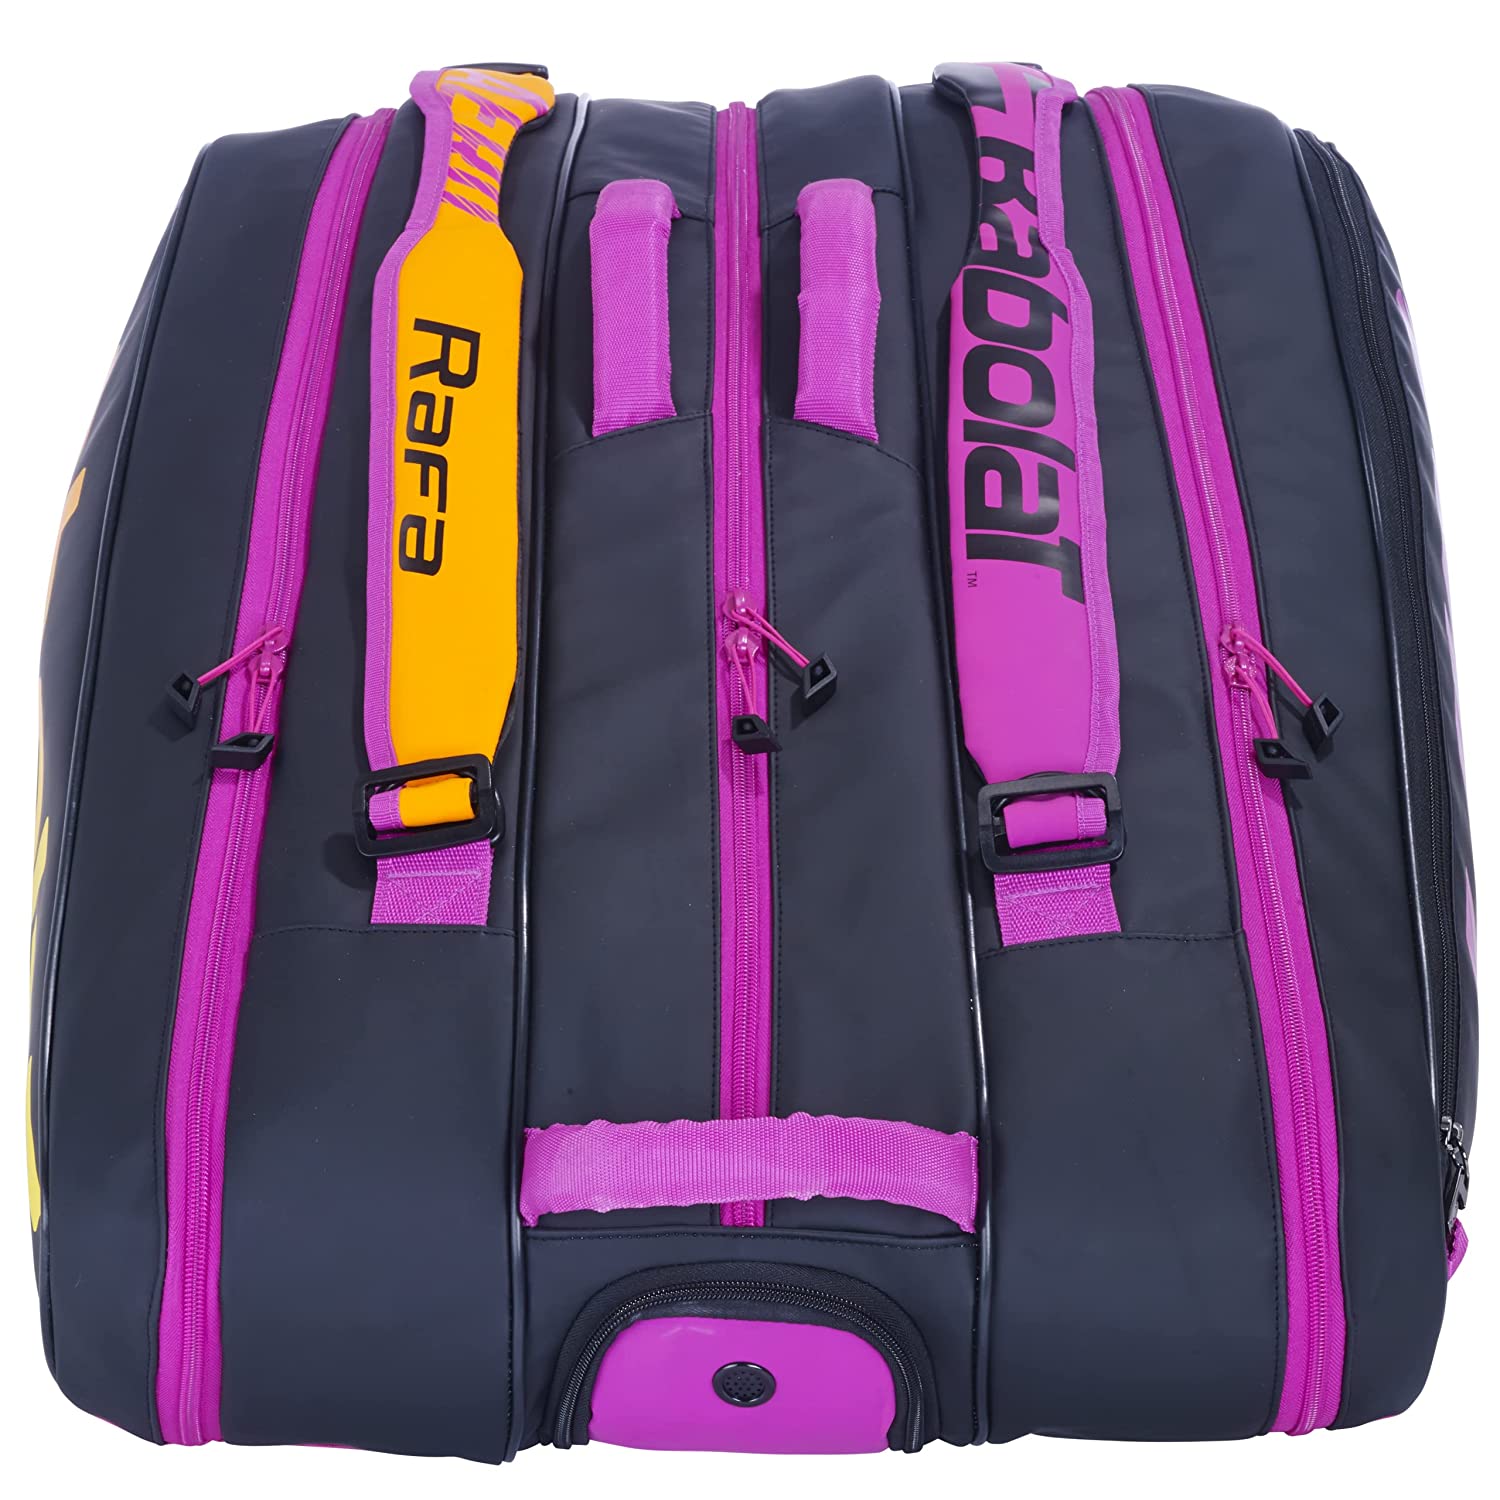 Babolat RH12 Pure Aero Rafa Tennis Kitbag, Black/Orange/Purple - Best Price online Prokicksports.com